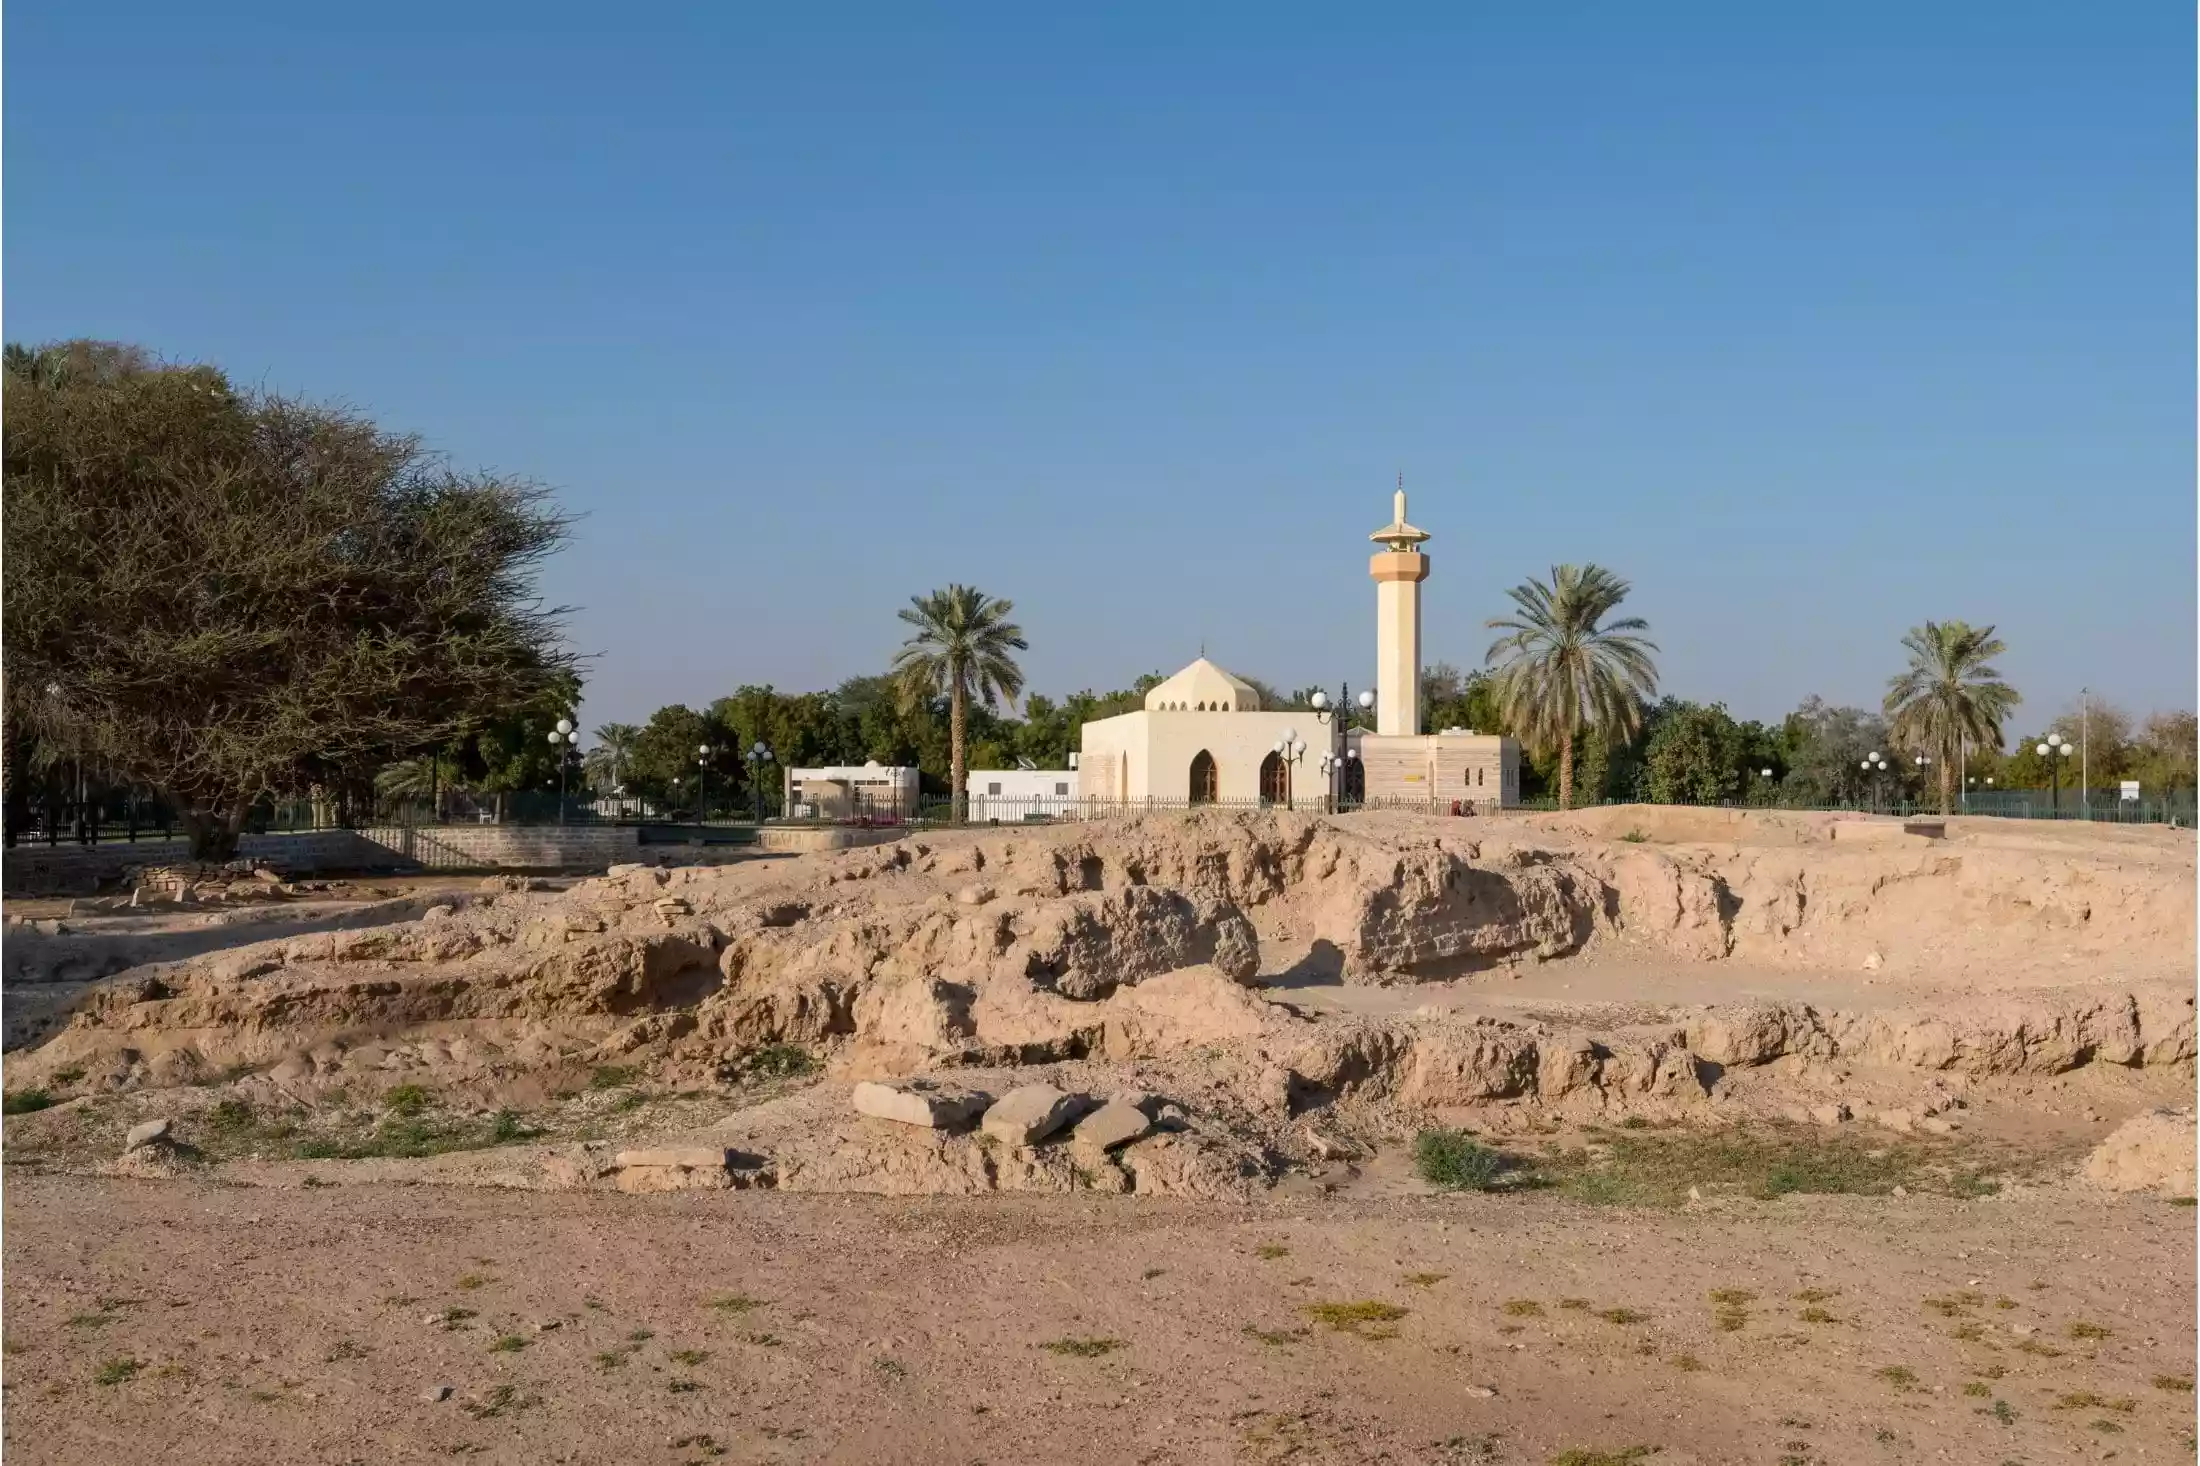 Hili Archaeological Site in Abu Dhabi